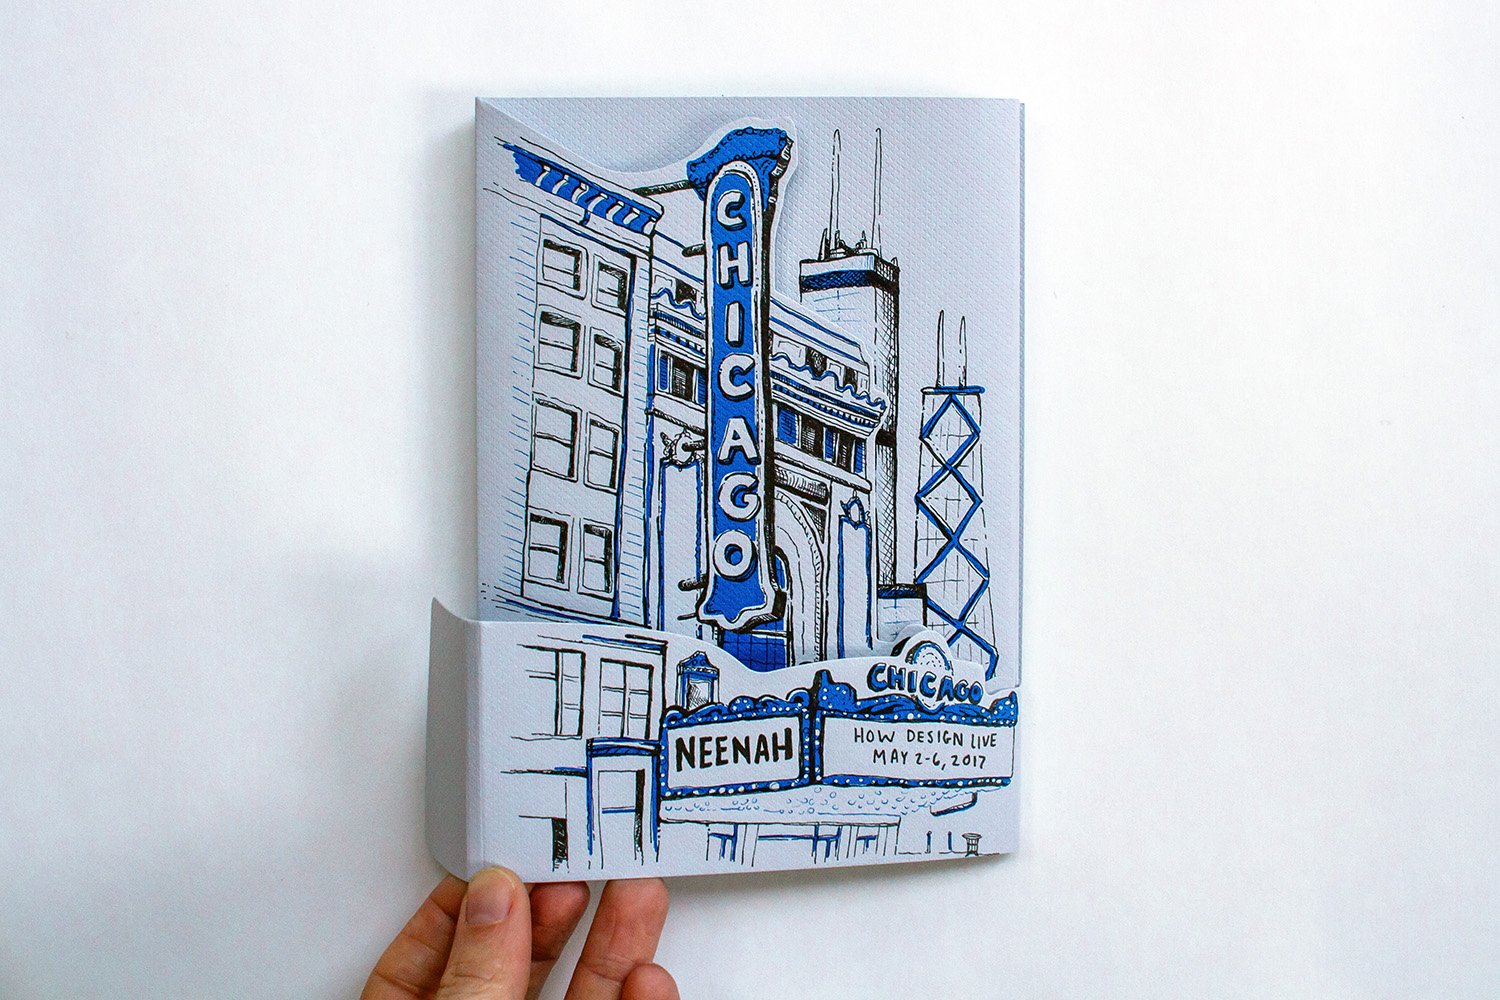 Neenah Chicago cover design